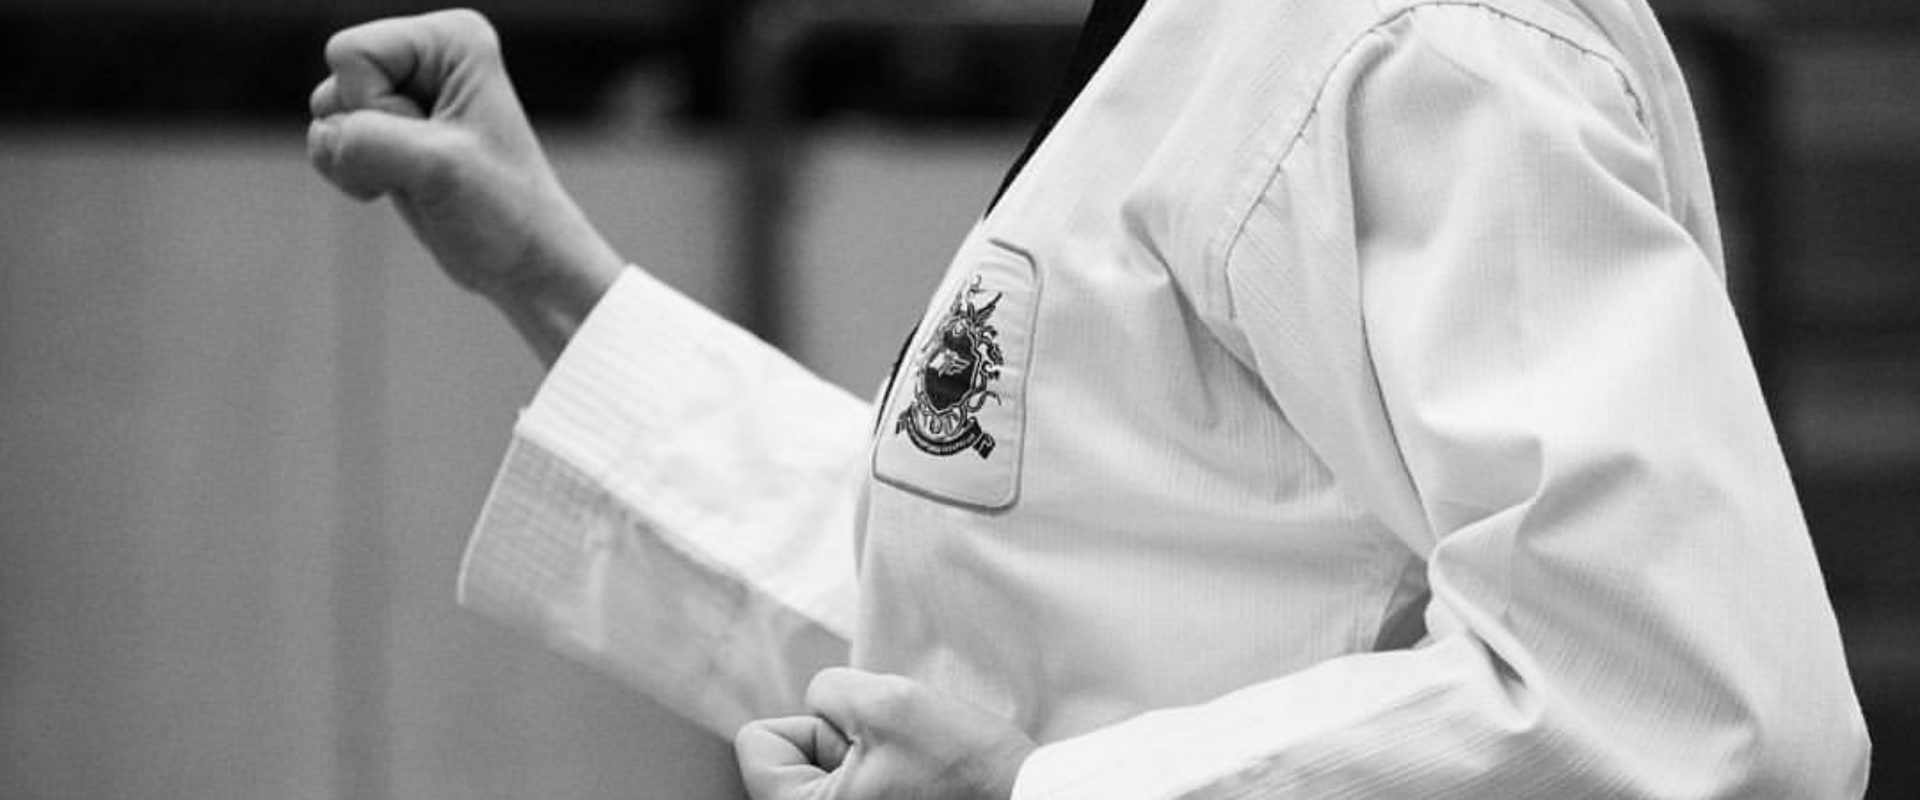 Vallentuna Taekwondo stänger tillfälligt